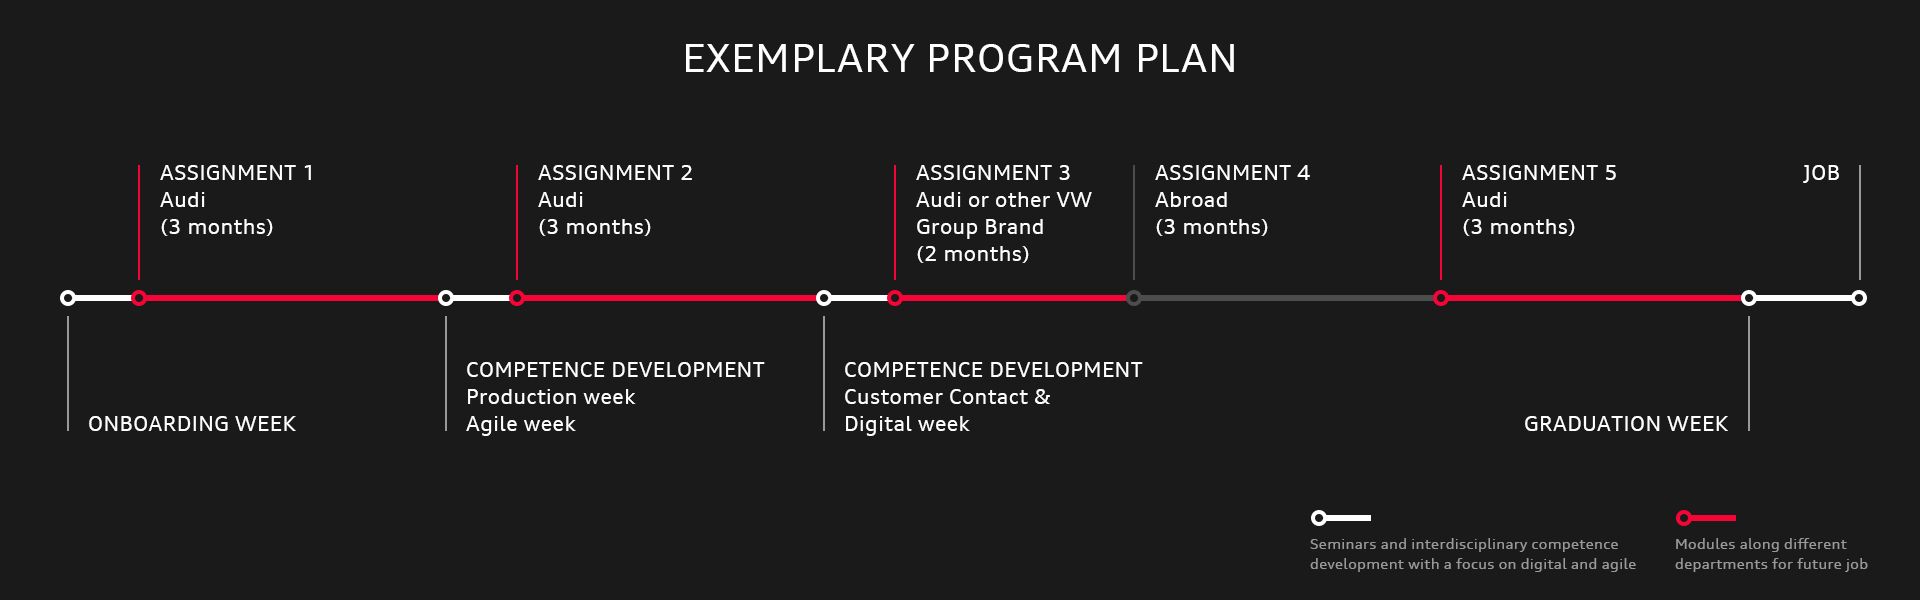 Exemplary program plan